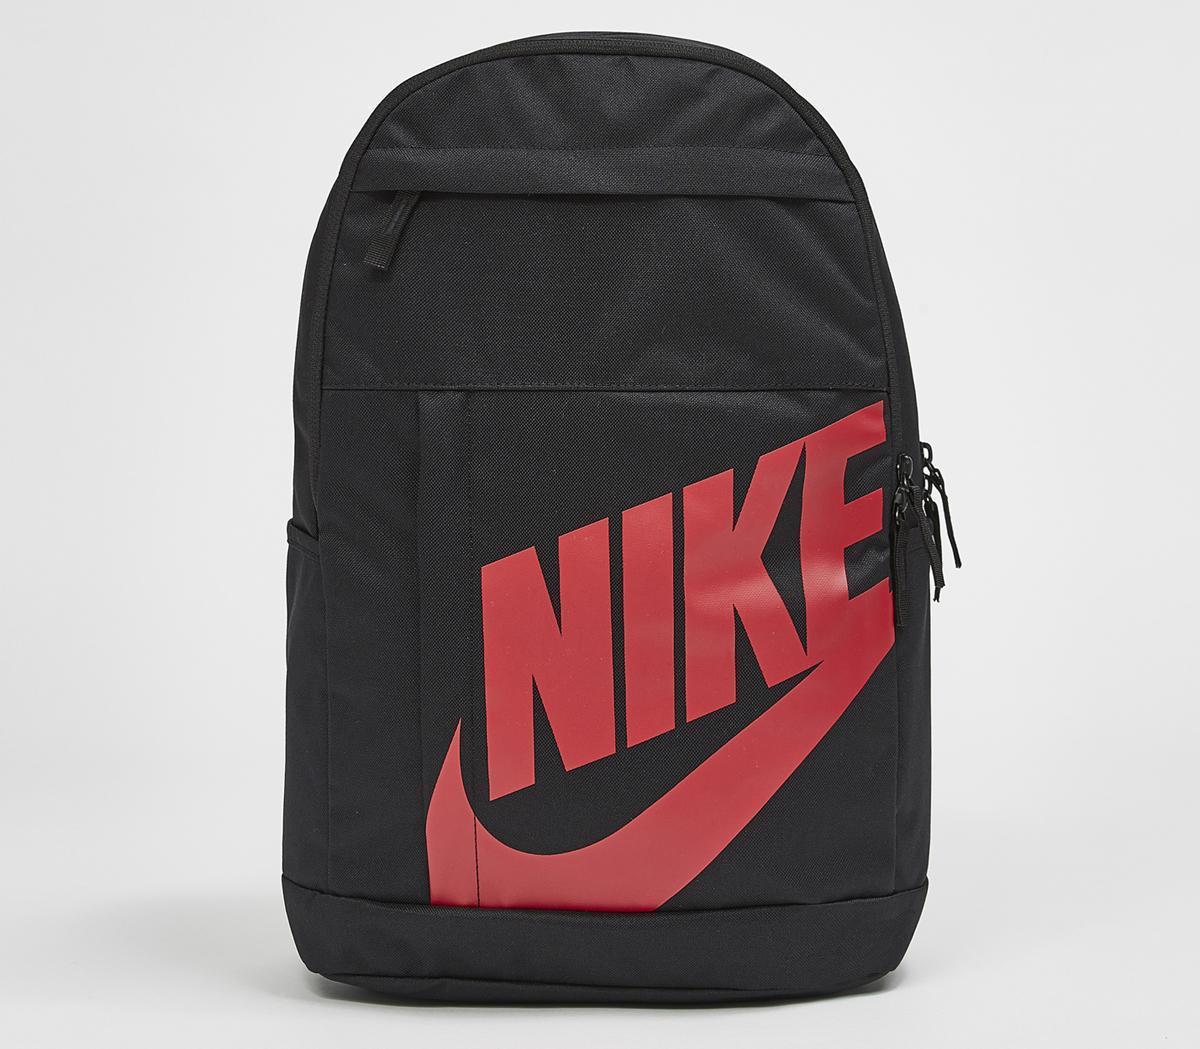 nike red and black backpack